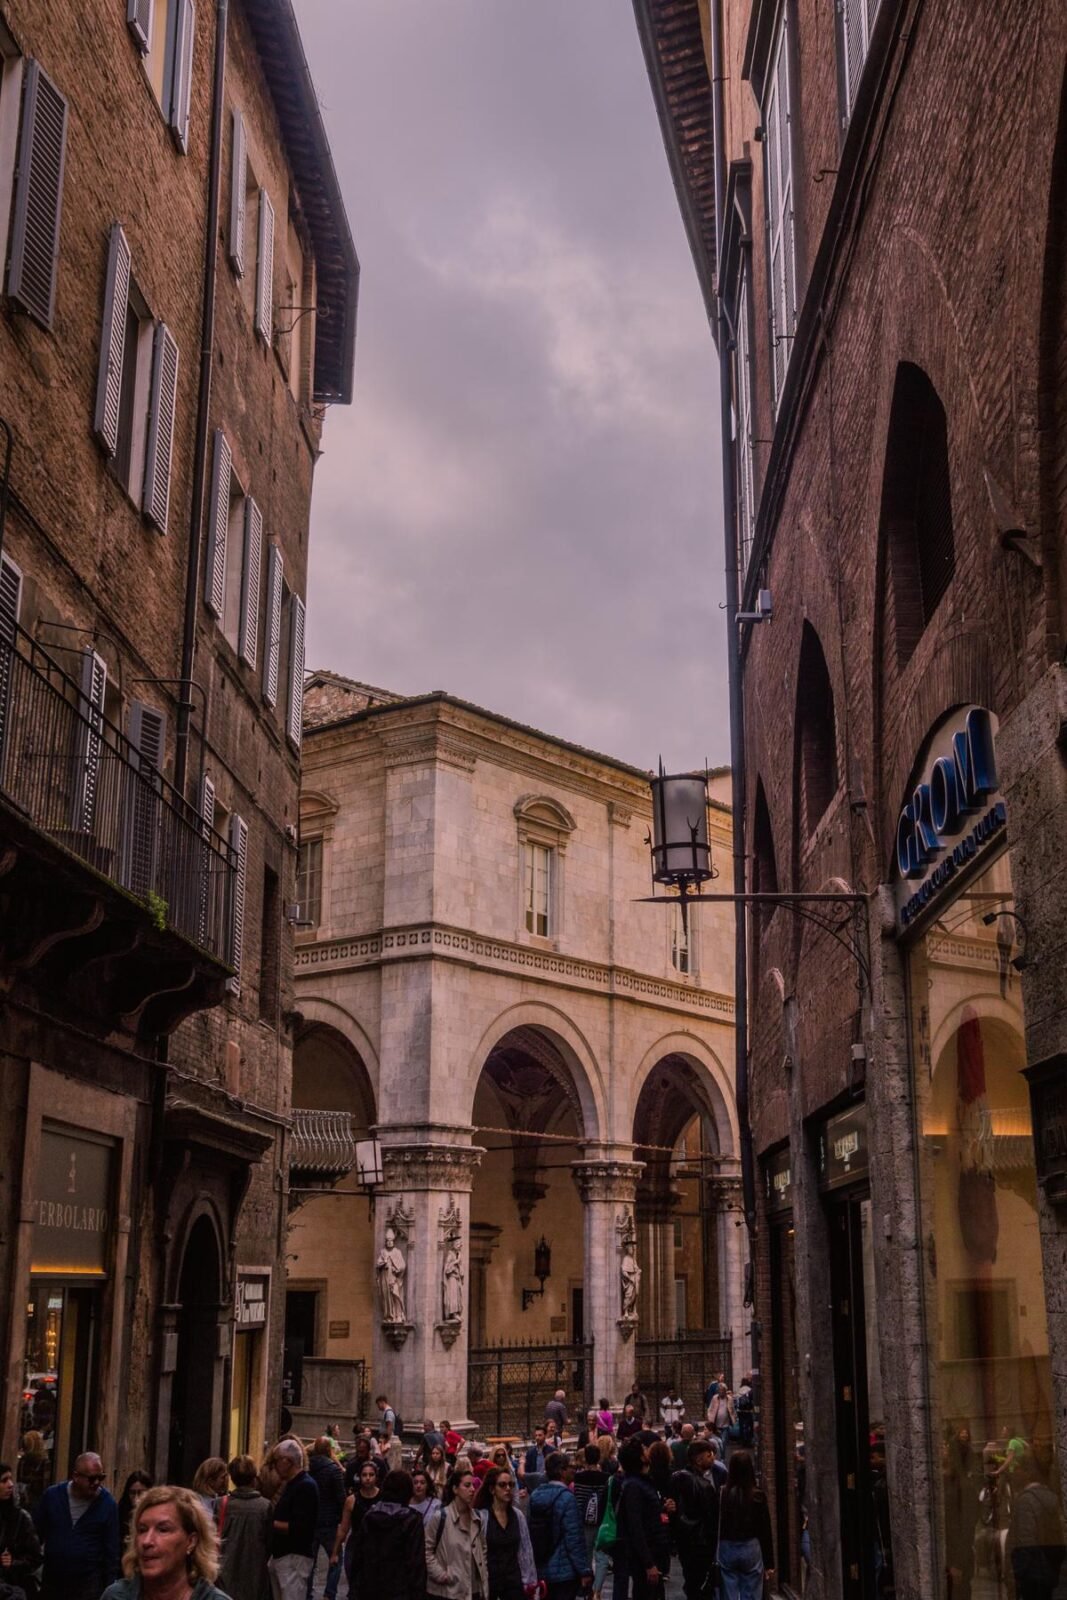 Busy street scene in Siena Italy at twilight